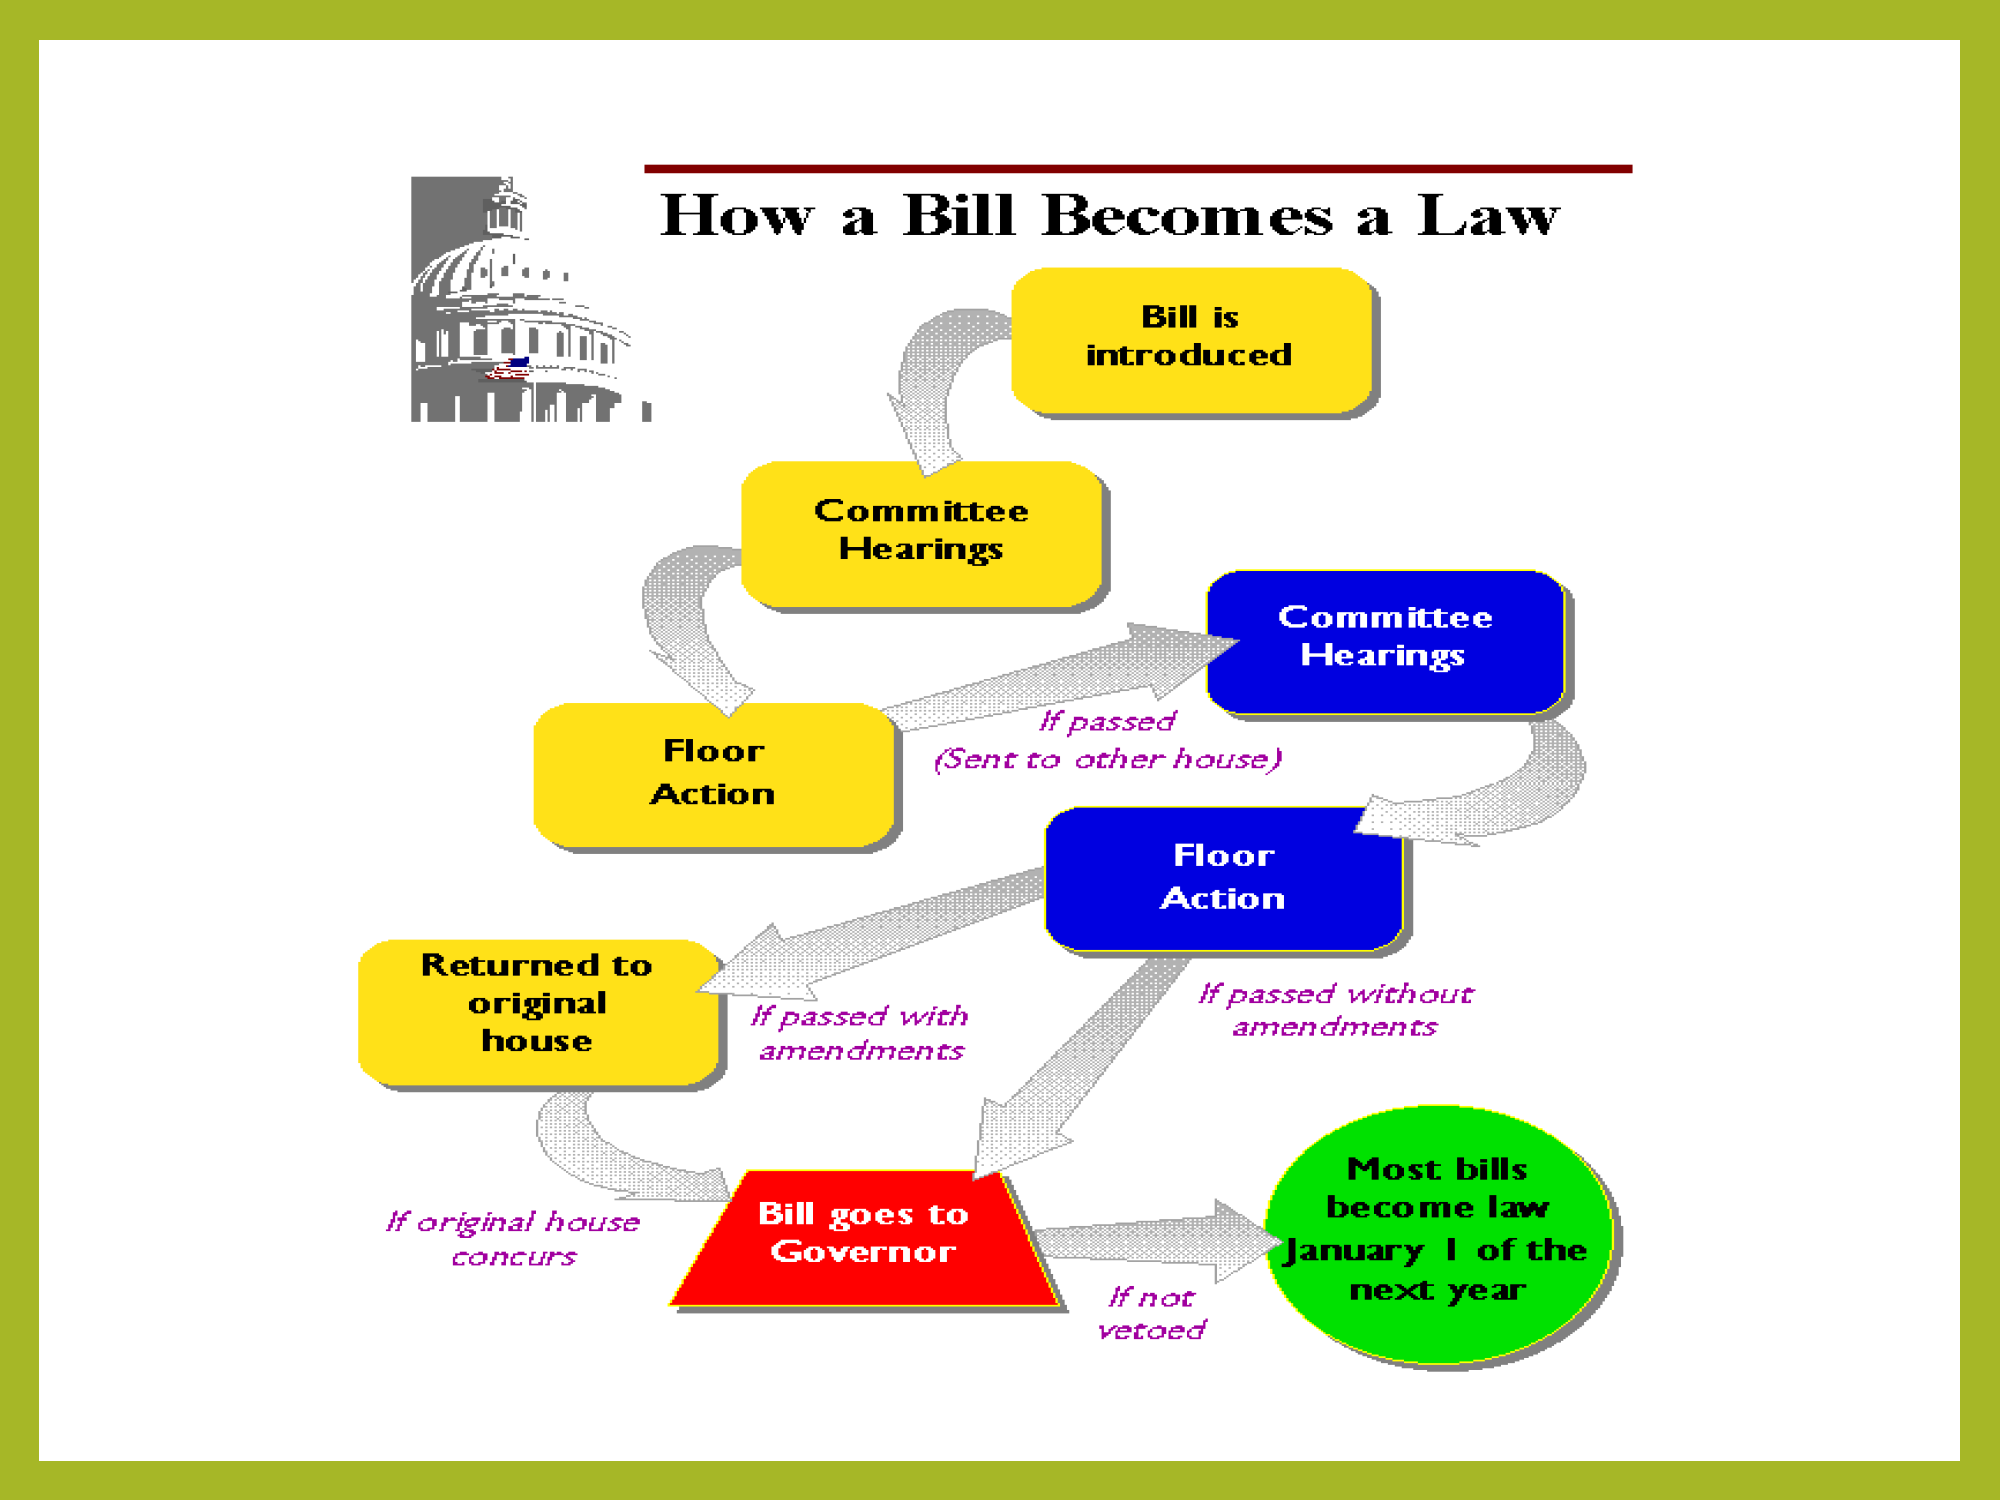 law how bill becomes flowchart a a Several Rights CA for LGBT Bills Advocating NCLR